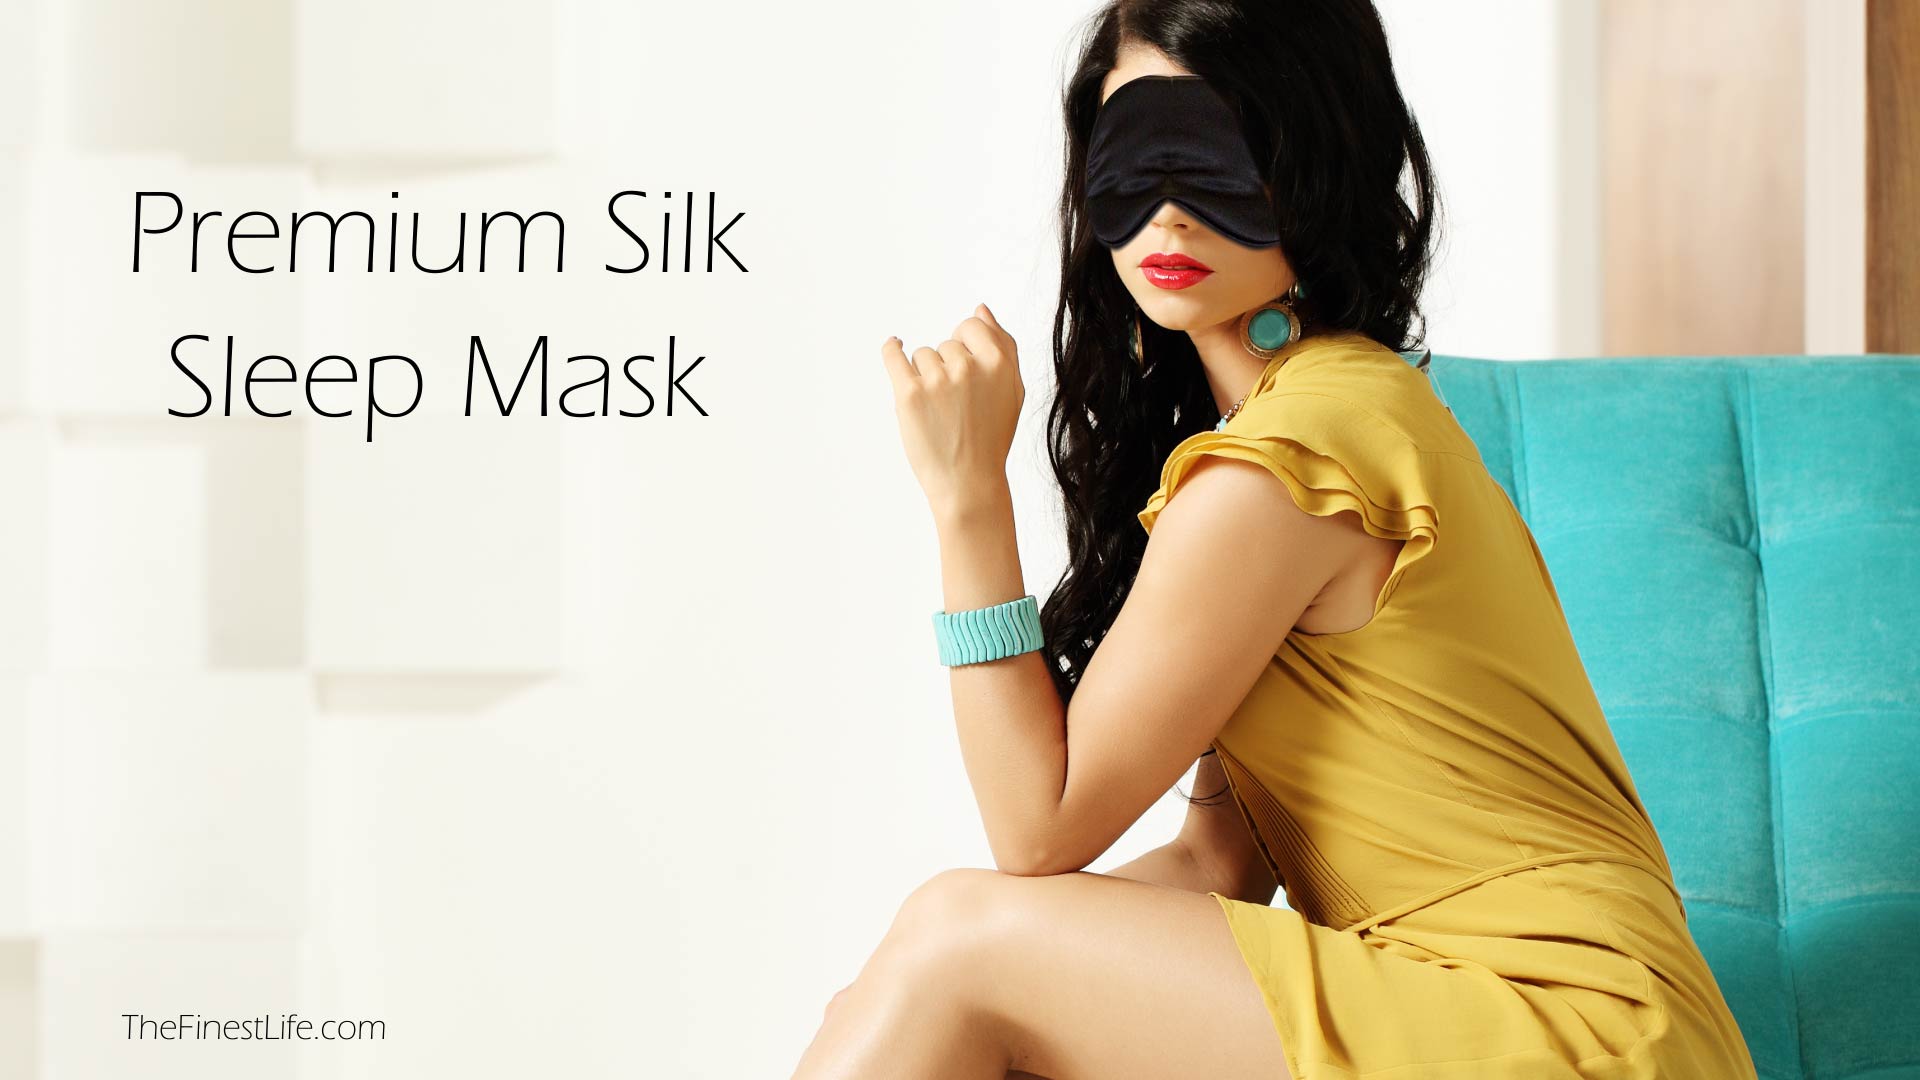 Premium Silk Sleep Mask The Finest Life 8273